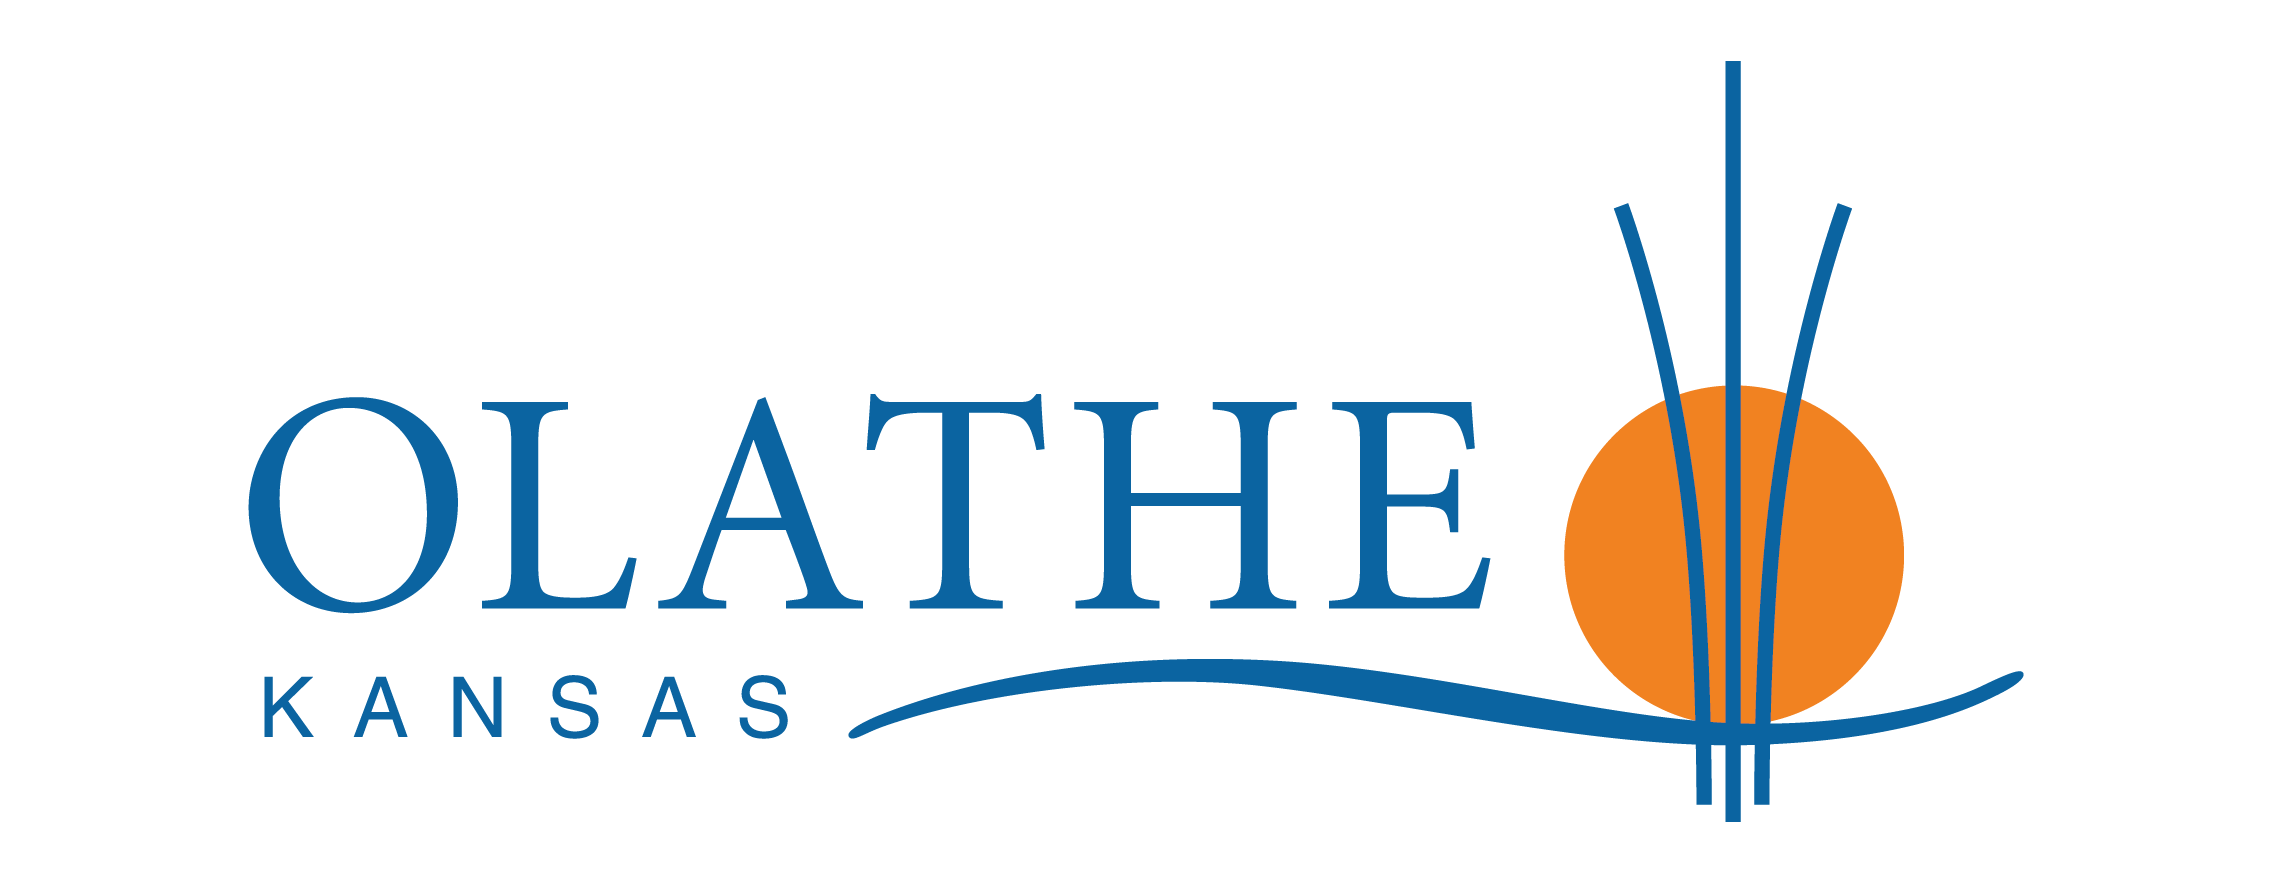 City Of Olathe logo